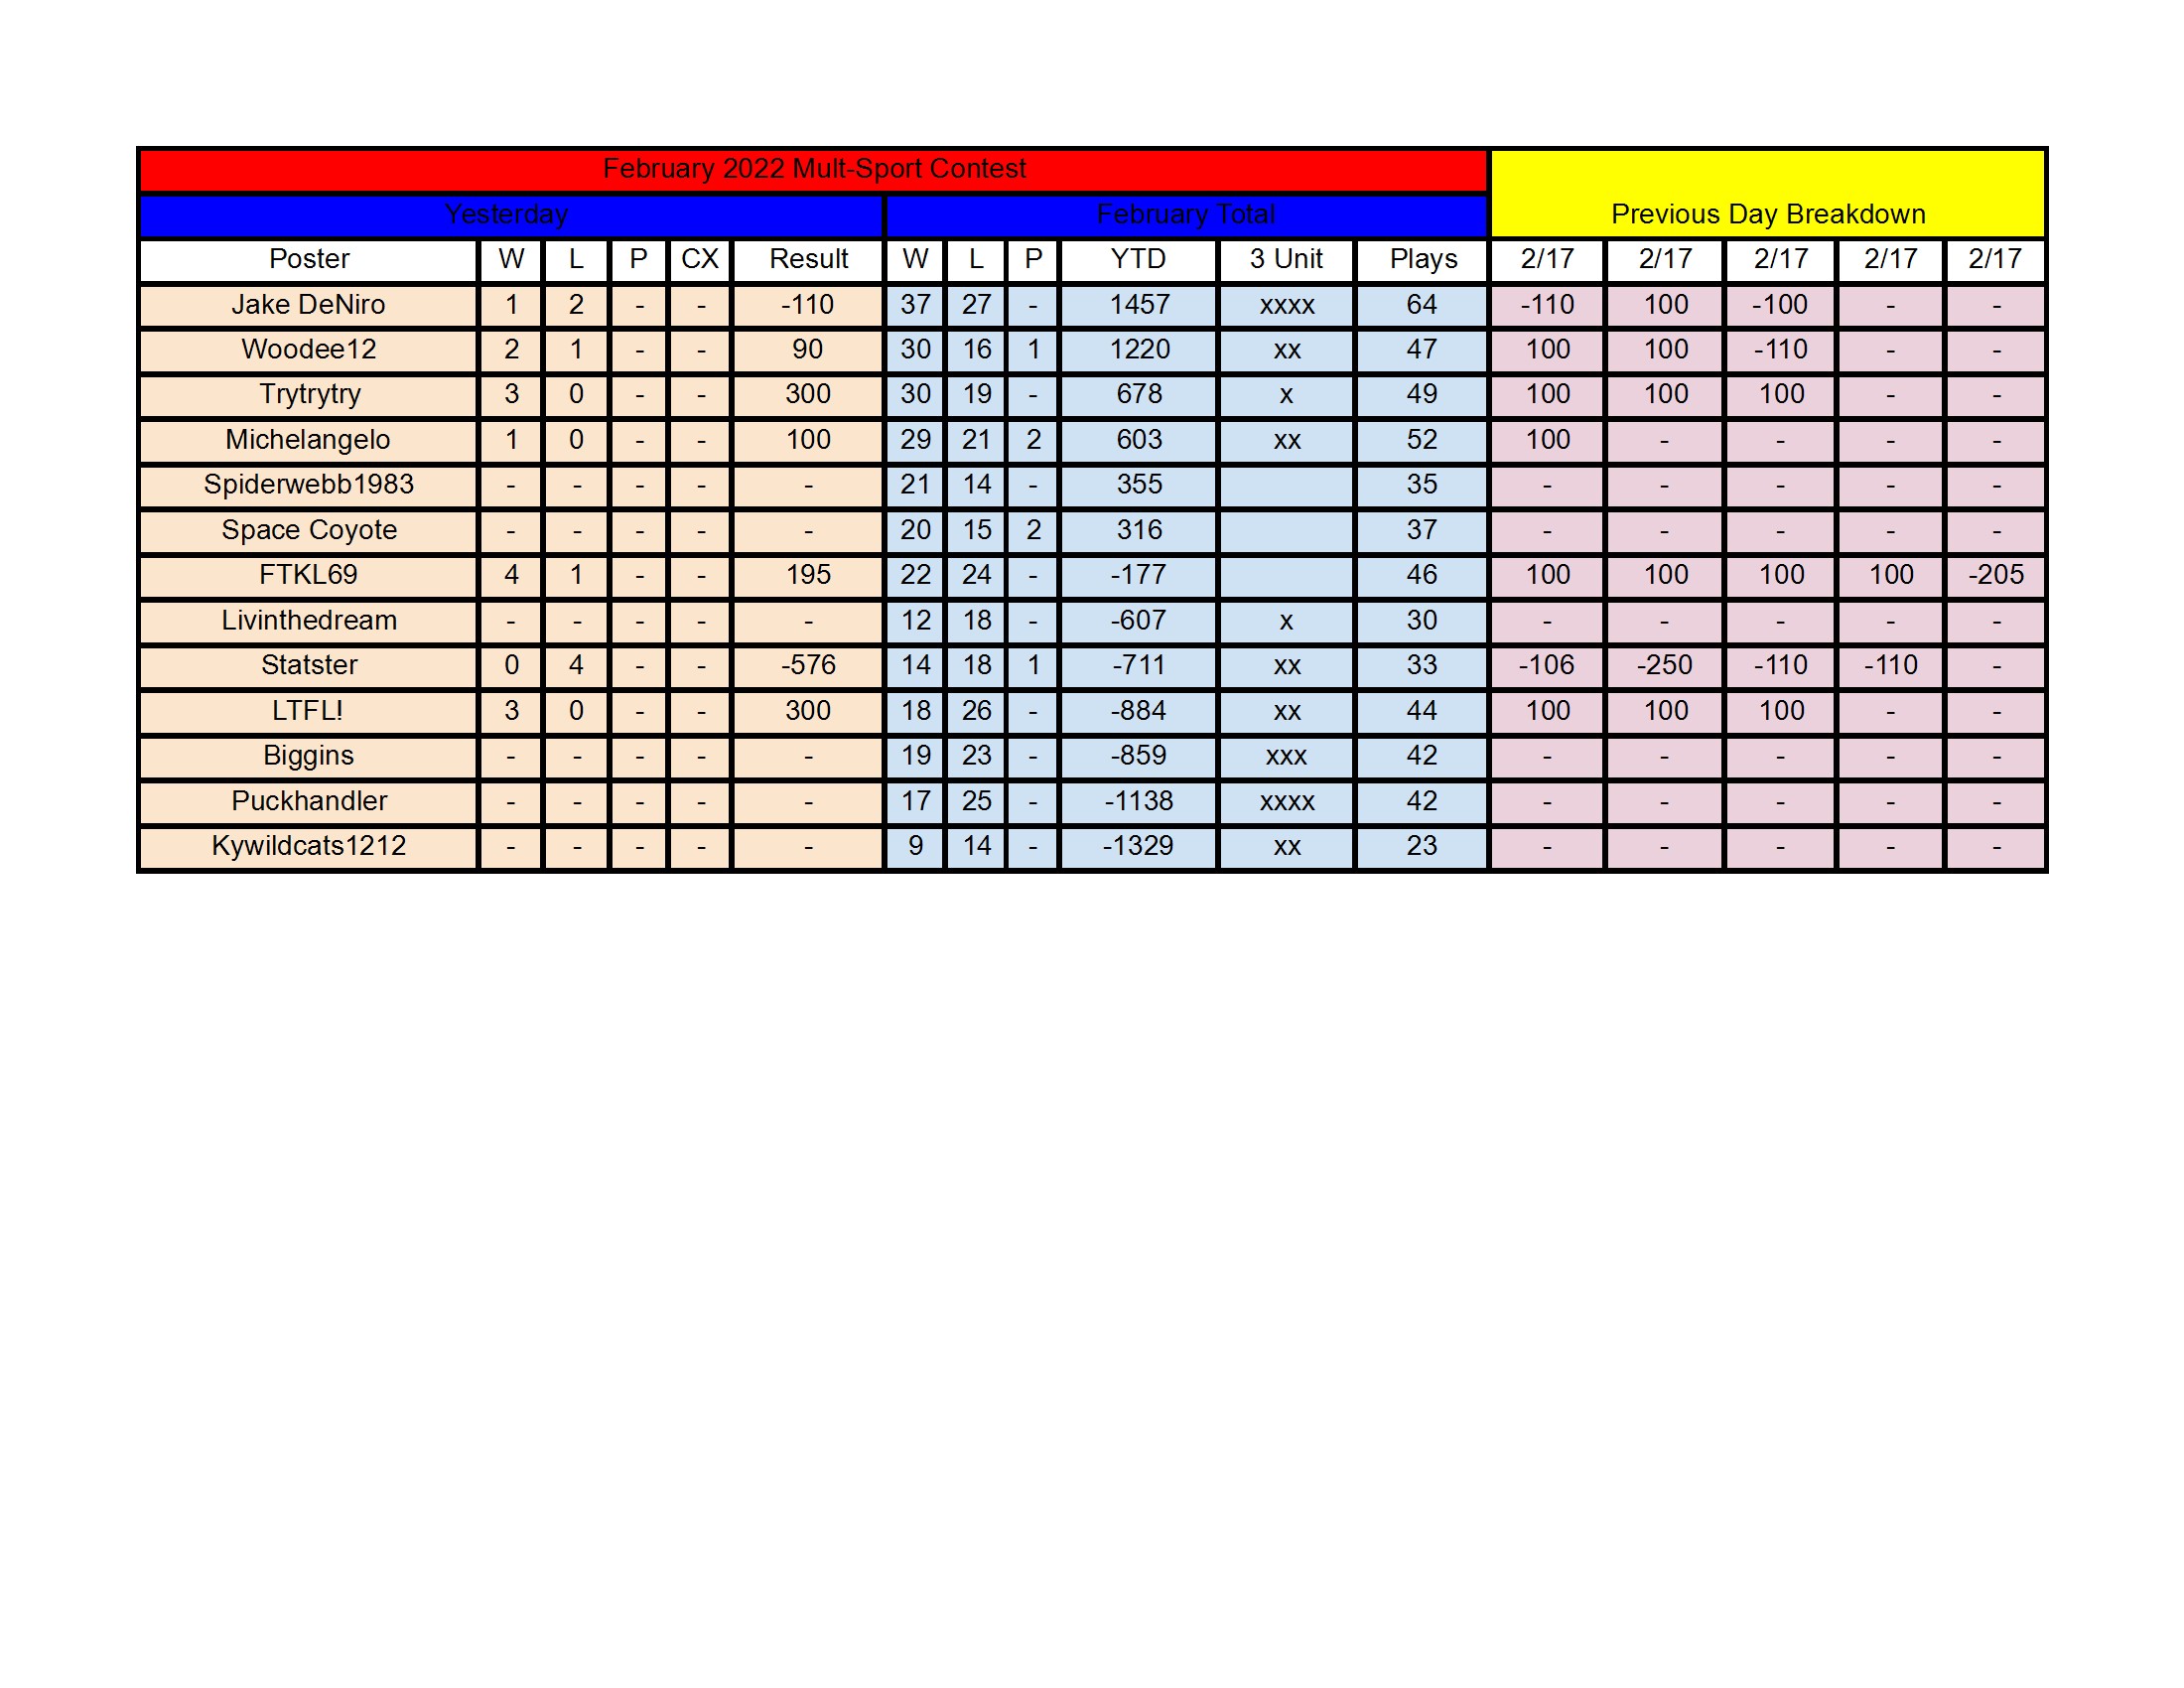 February Standings - 2_17 conv 1.jpeg